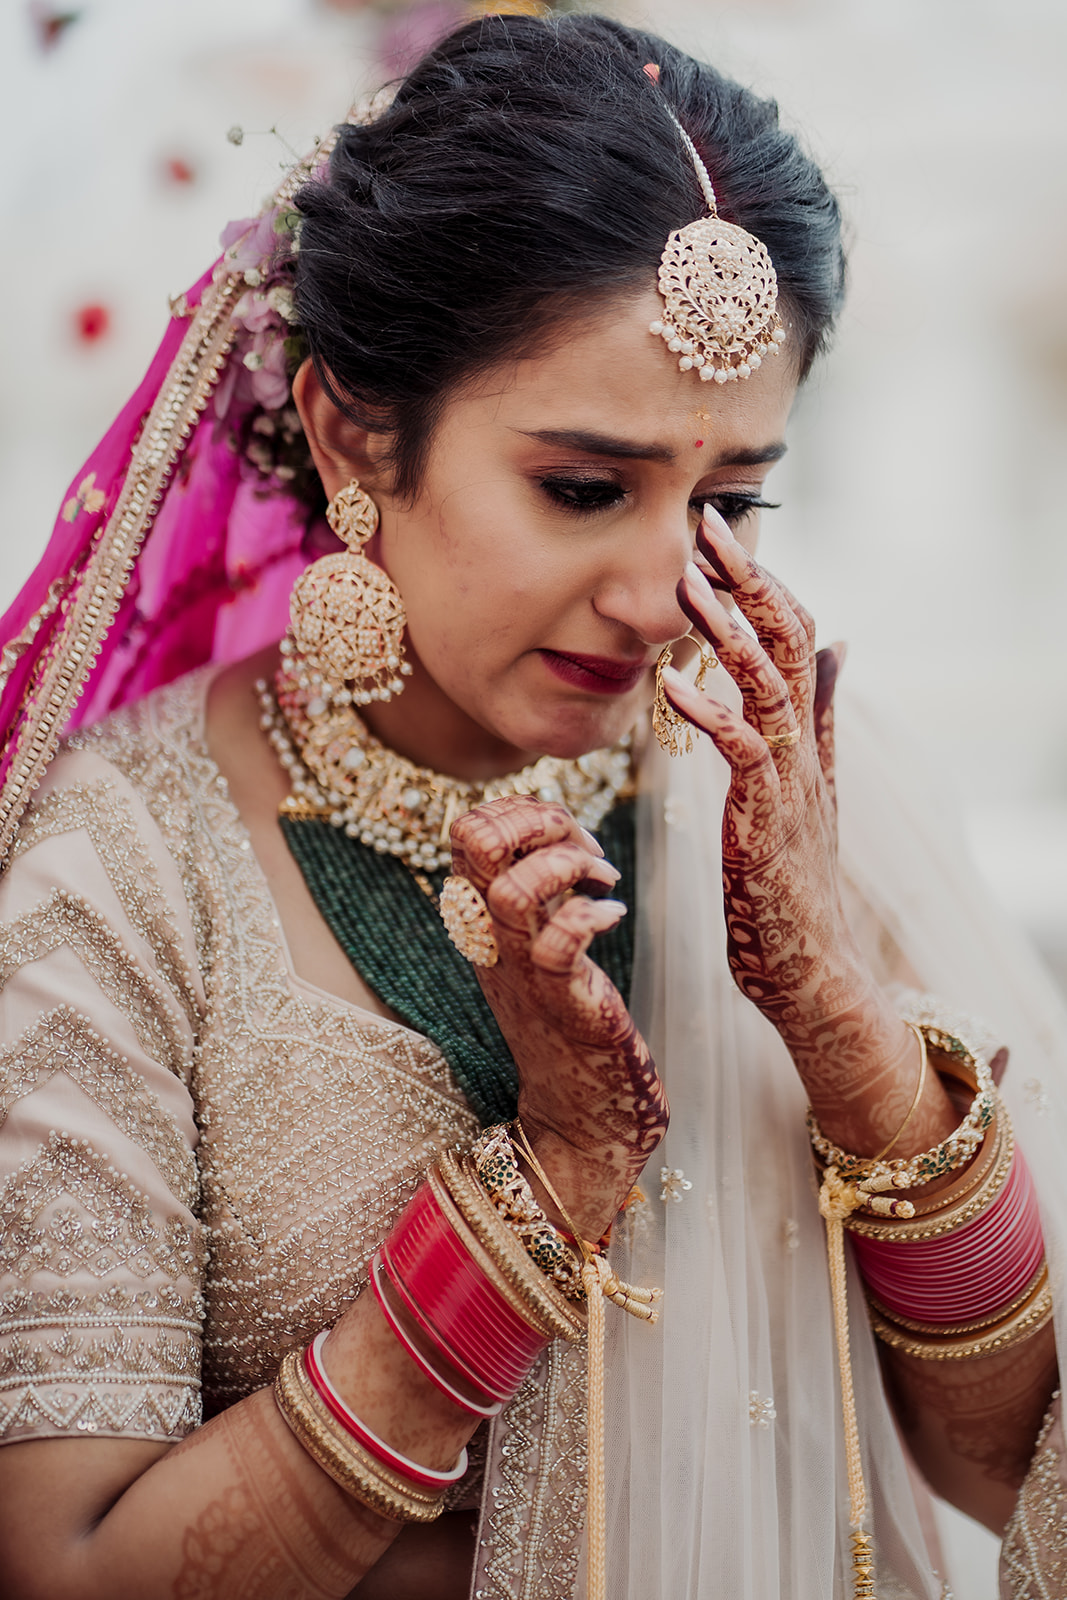 Emotional bride: Tears of joy glisten in the bride's eyes after a heartfelt wedding ceremony